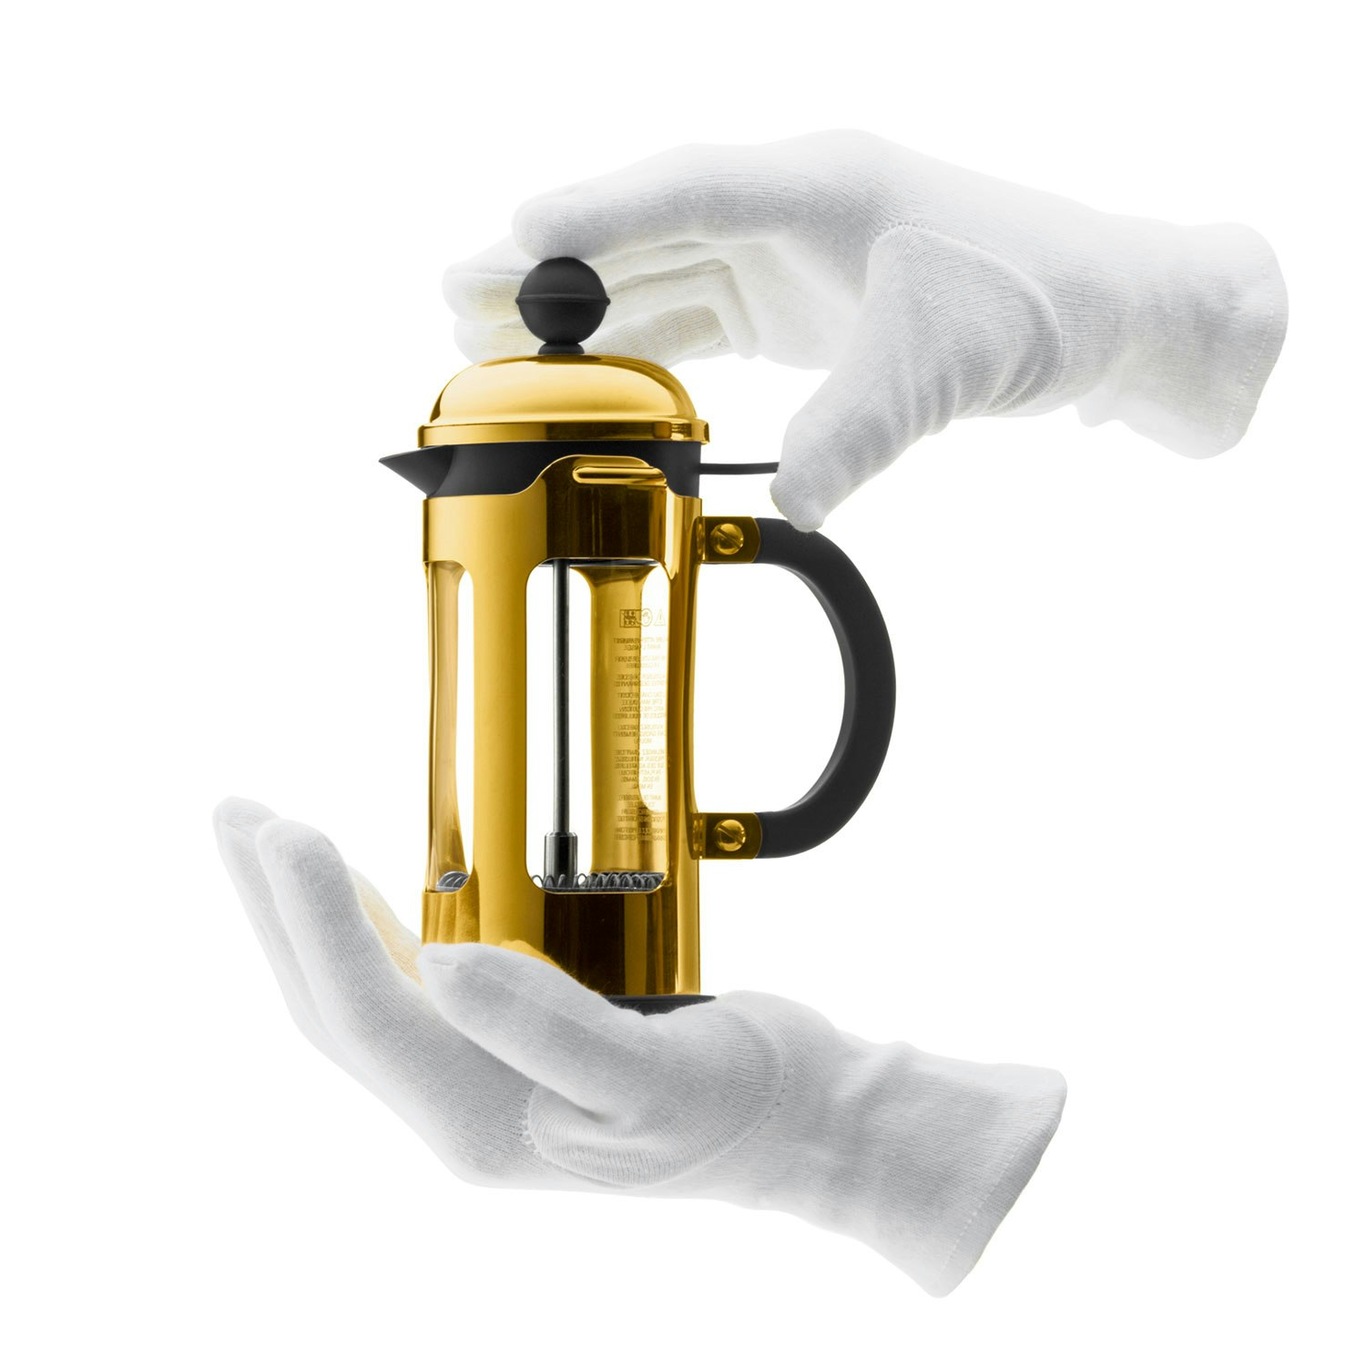 https://royaldesign.com/image/2/bodum-chambord-coffee-press-3-cups-5?w=800&quality=80